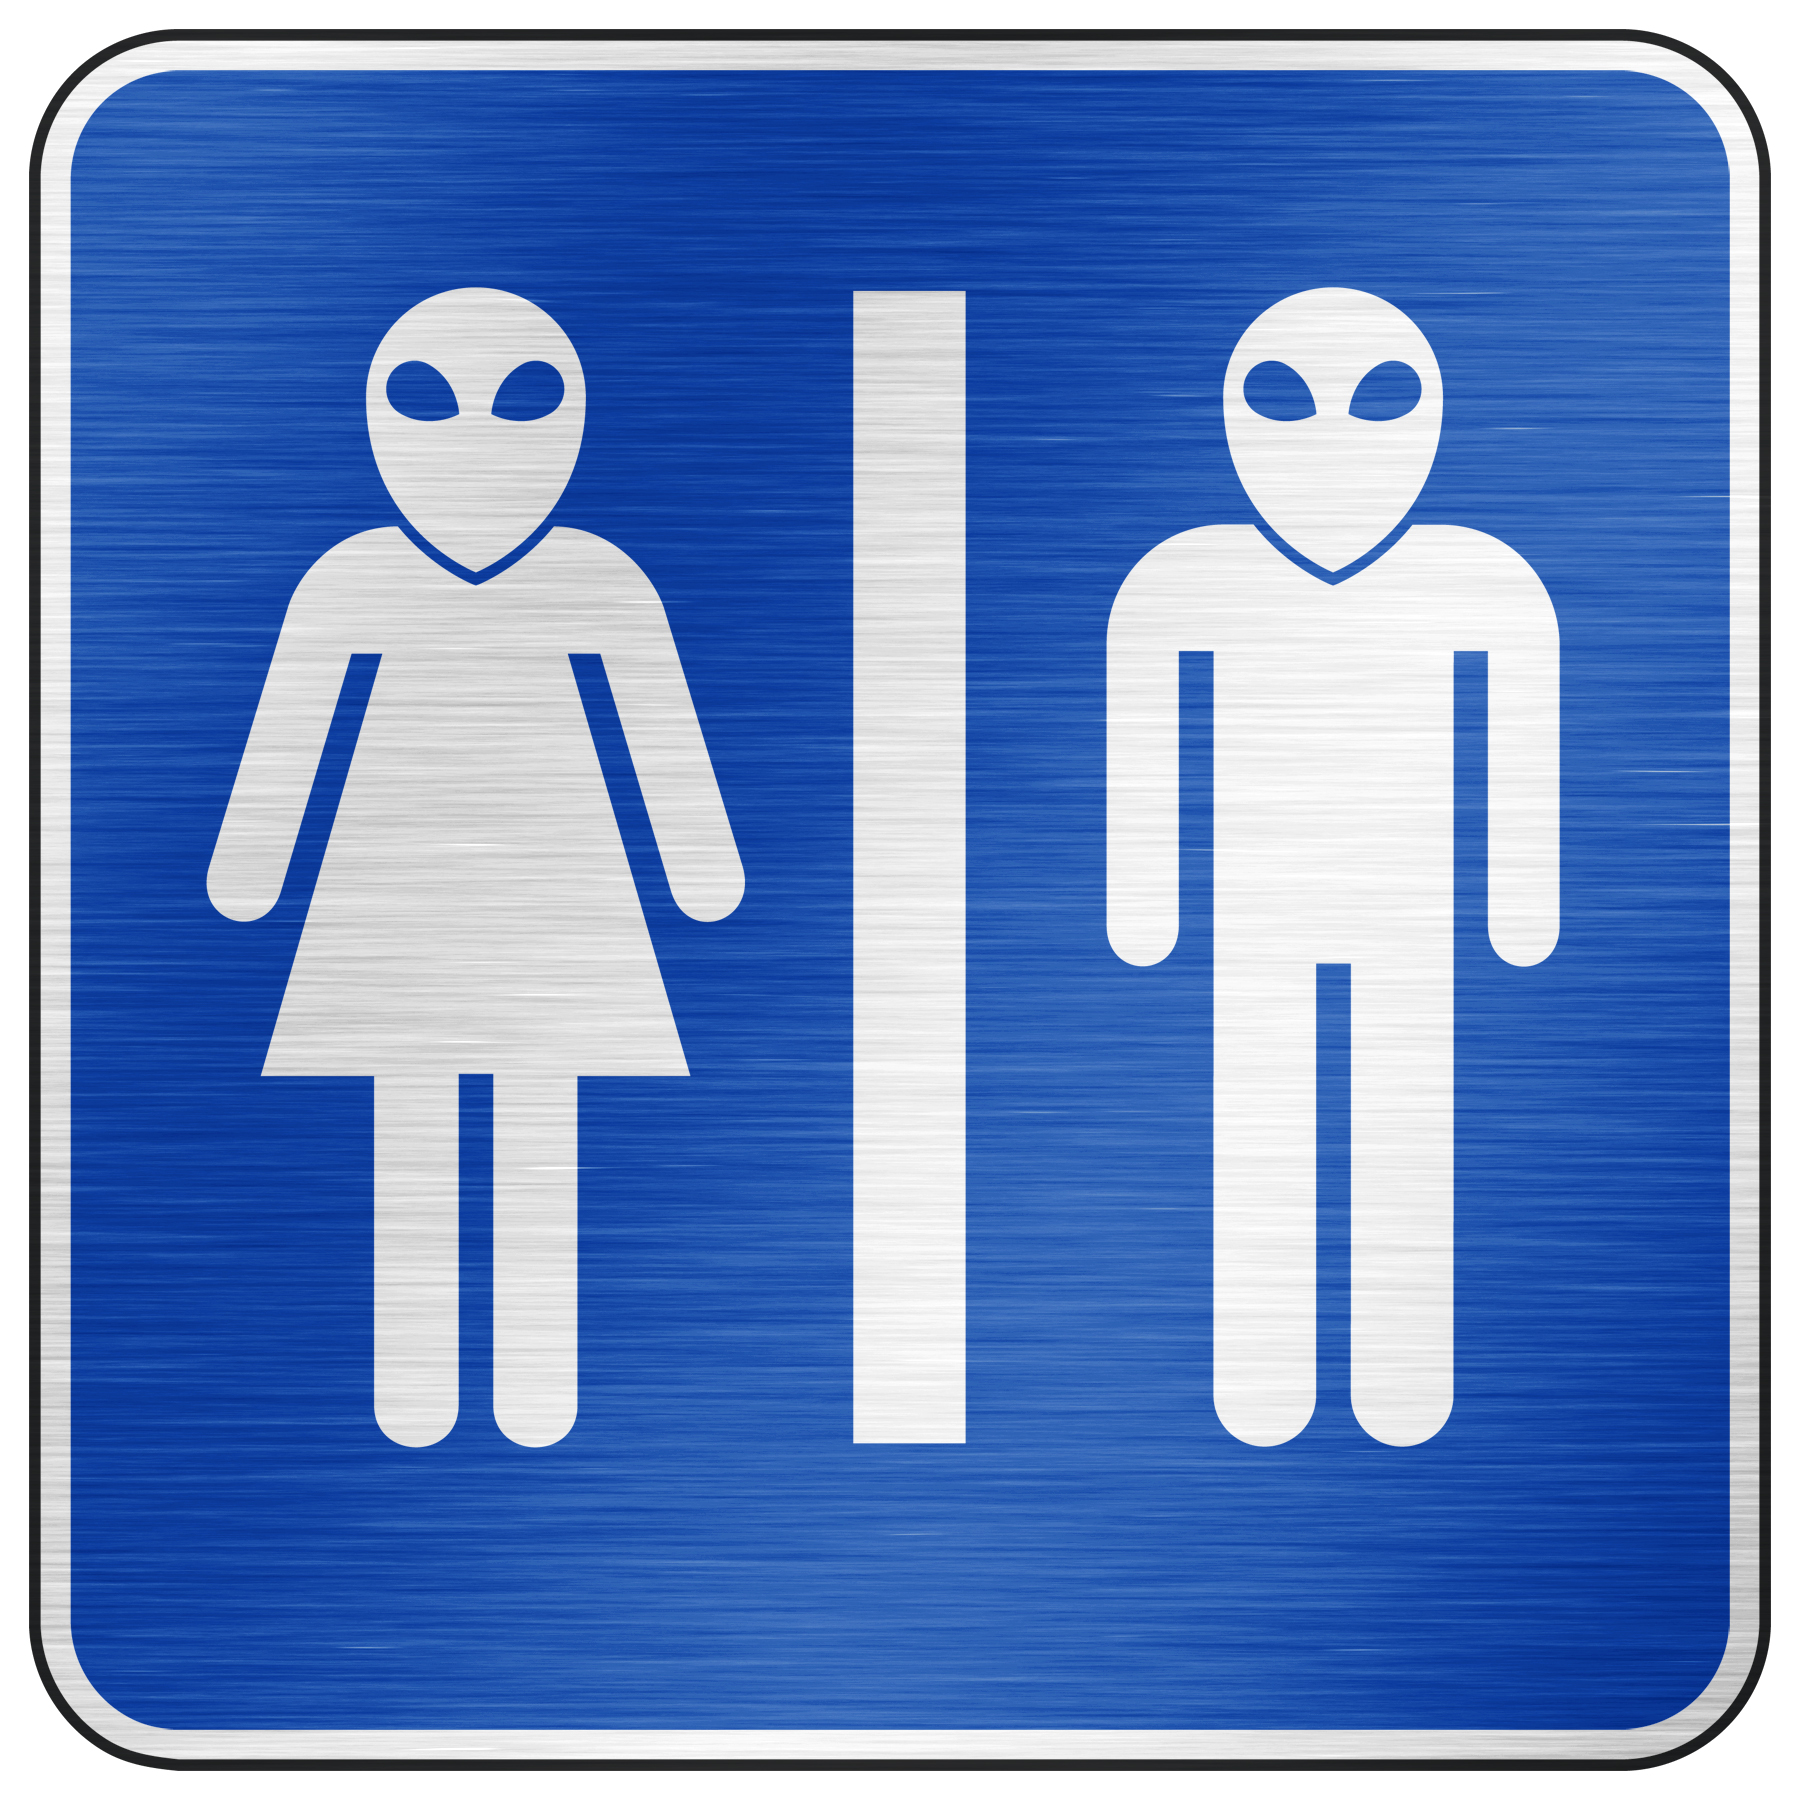 Brushed Metal Sign - Alien Toilet, Alien, Picture, Sci-fi, Sci, HQ Photo